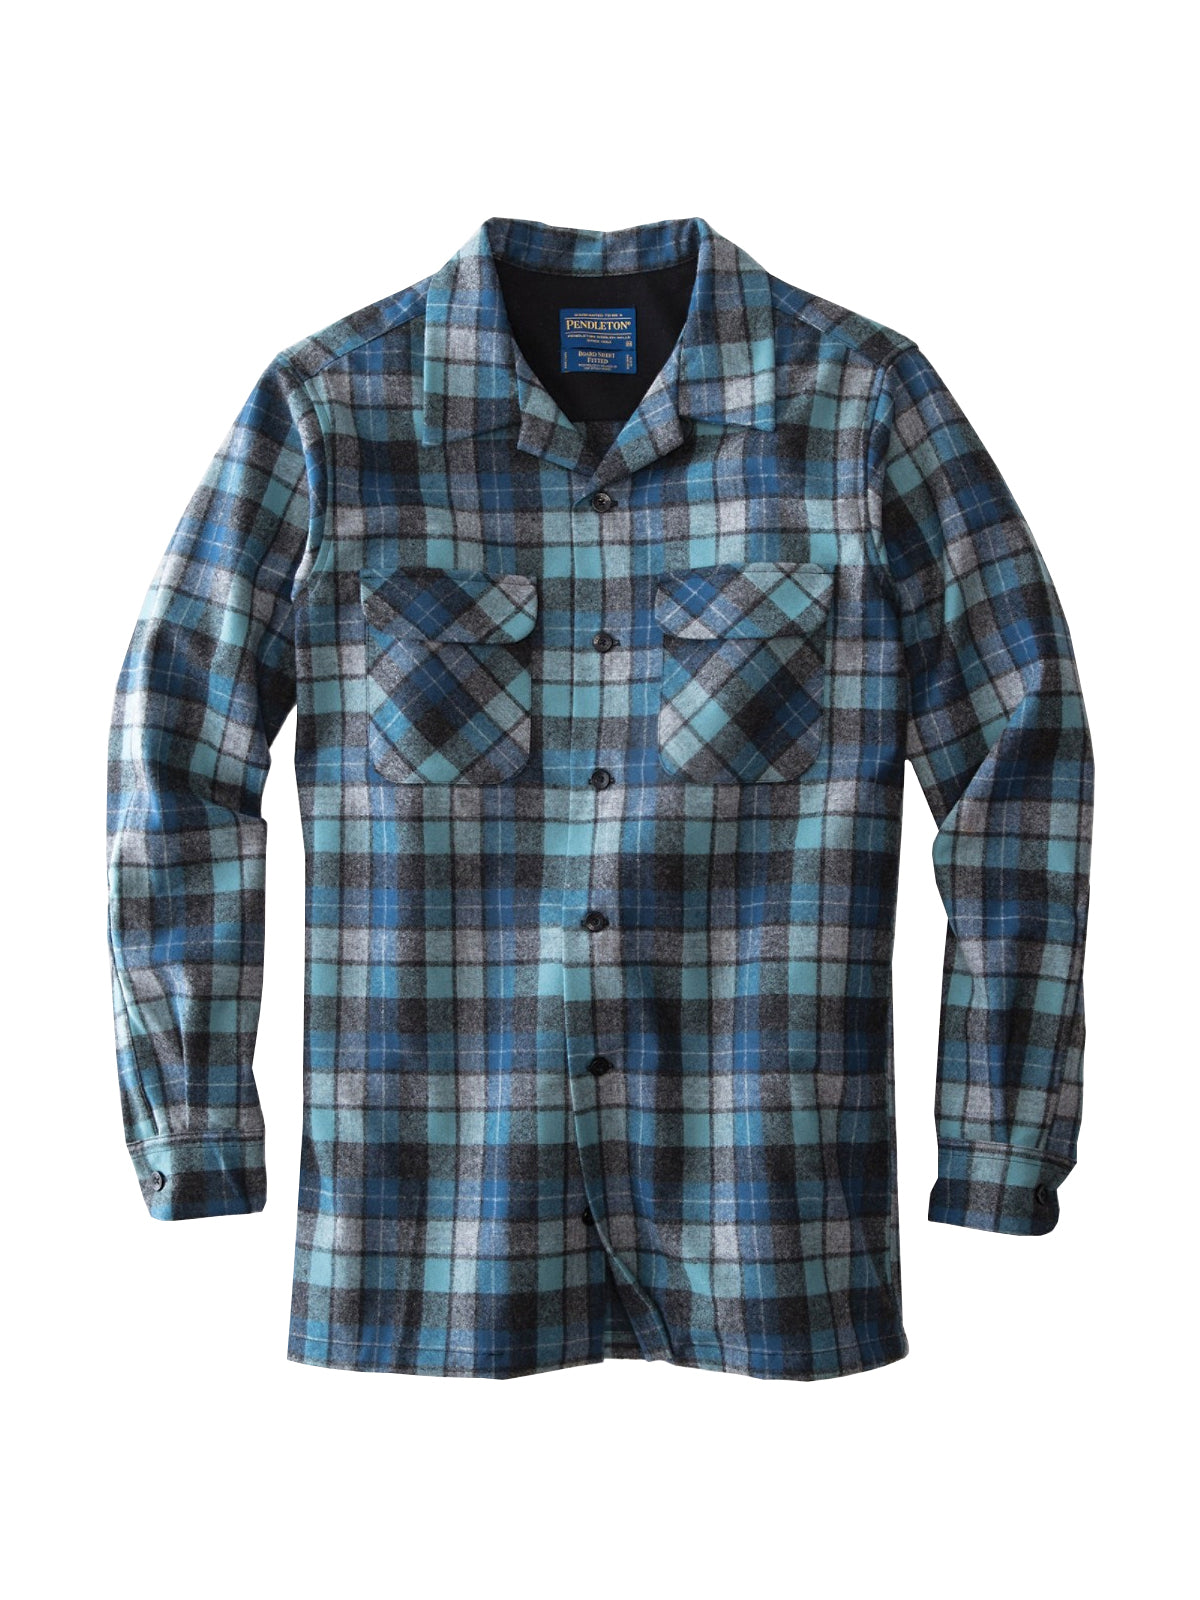 Pendleton 100% Wool Beach Boy Board Shirts AA800-30789 - Tall Man Sizes